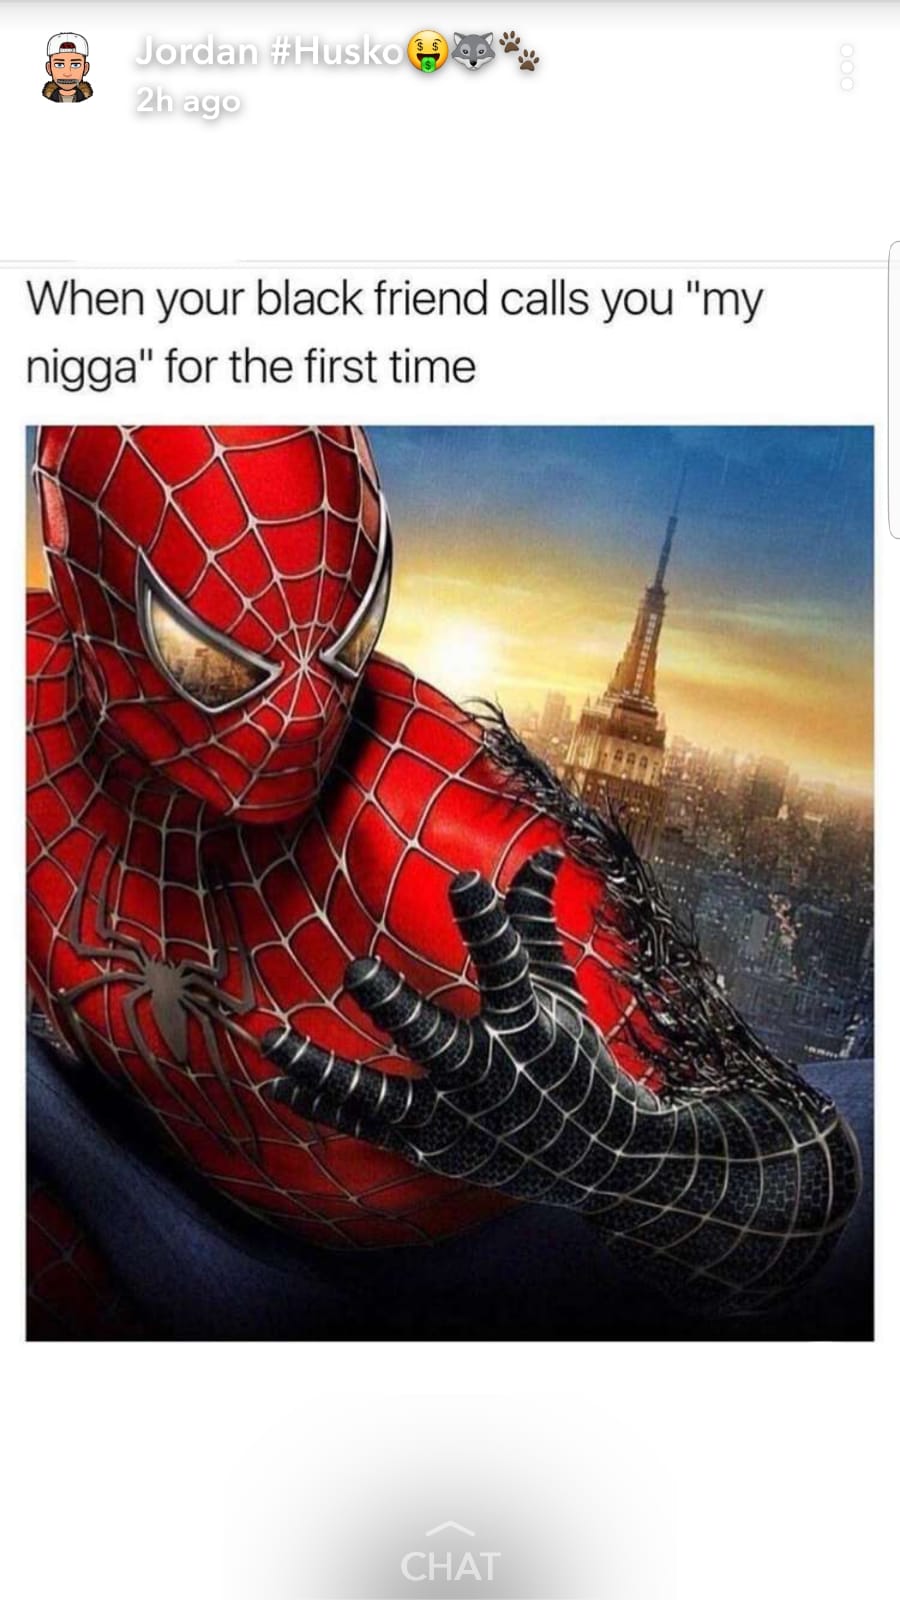 Spiderman meme about how it feels when a black friend calls you nigga